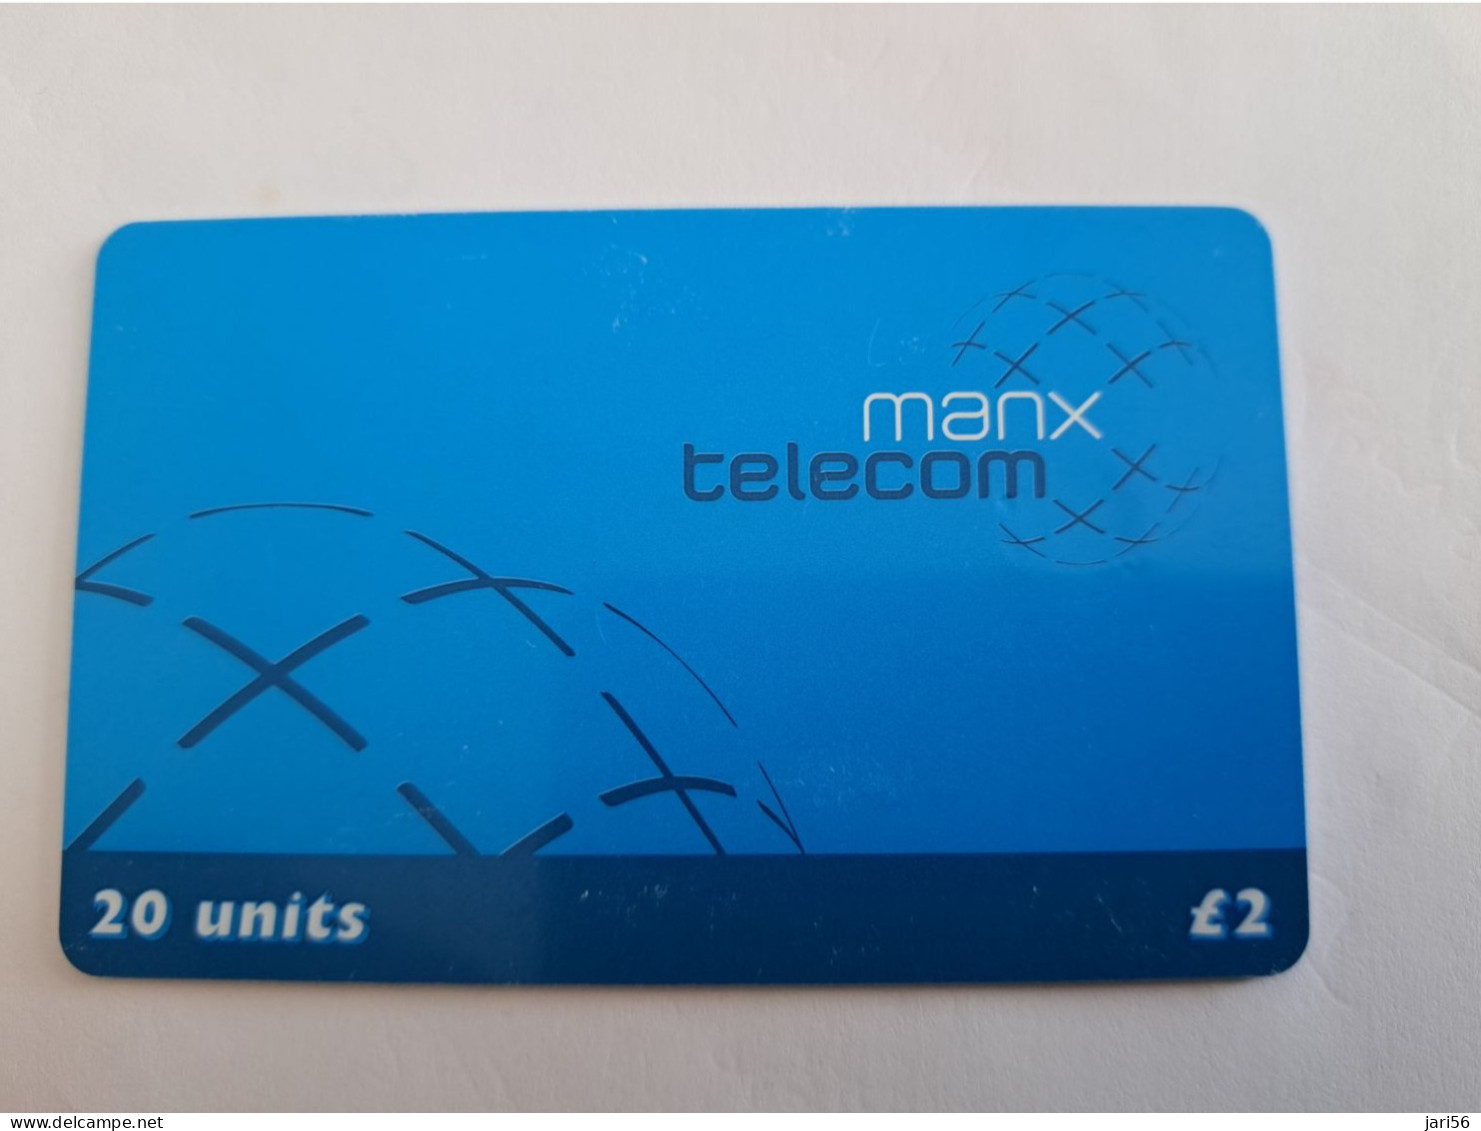 ISLE OF MAN 2 POUND  MANX TELECOM  21 UNITS / MANX TELECOM/ BLUE CARD            CHIP   ** 15104** - Man (Ile De)